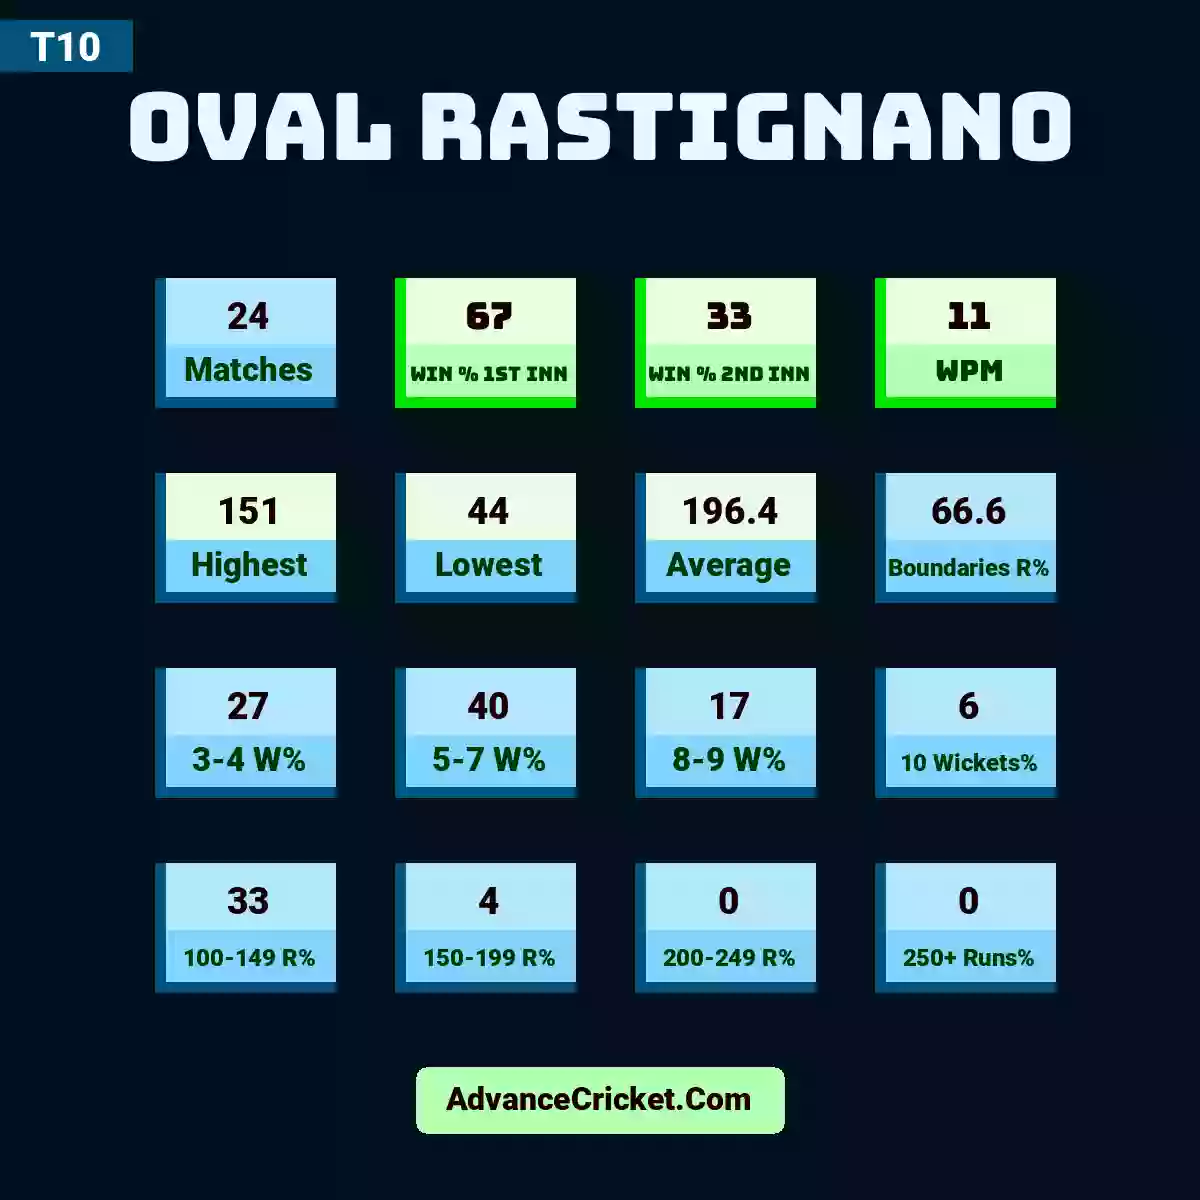 Image showing Oval Rastignano with Matches: 24, Win % 1st Inn: 67, Win % 2nd Inn: 33, WPM: 11, Highest: 151, Lowest: 44, Average: 196.4, Boundaries R%: 66.6, 3-4 W%: 27, 5-7 W%: 40, 8-9 W%: 17, 10 Wickets%: 6, 100-149 R%: 33, 150-199 R%: 4, 200-249 R%: 0, 250+ Runs%: 0.